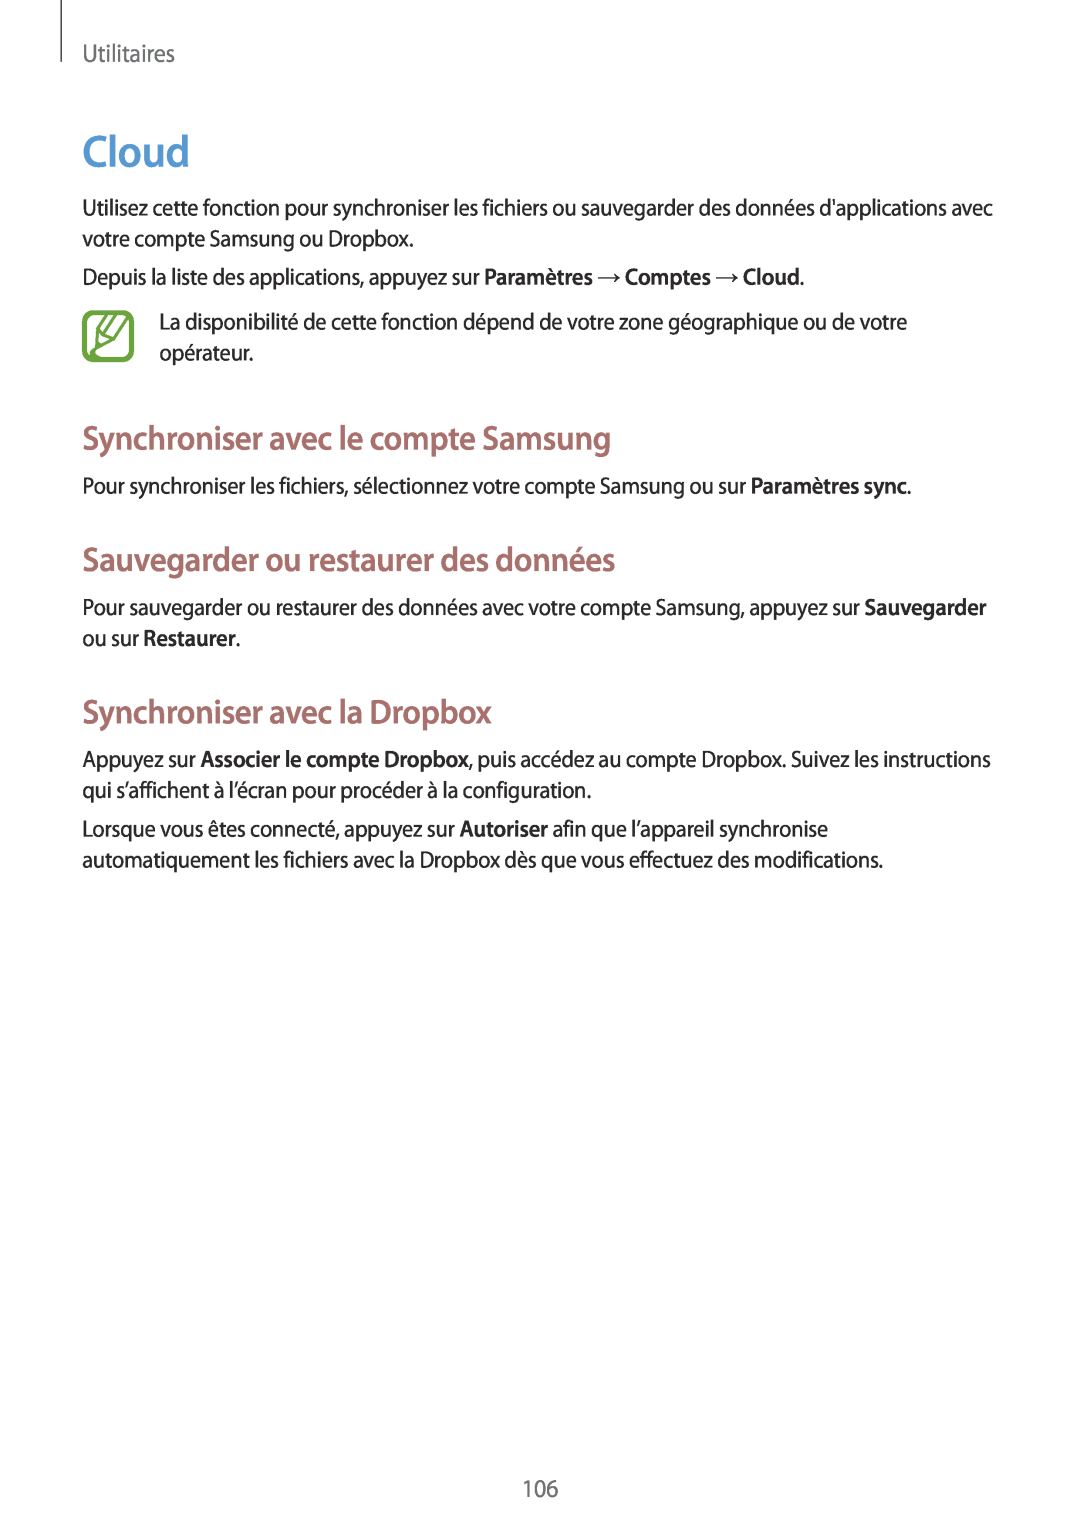 Samsung GT-N7105TADBOG manual Cloud, Synchroniser avec le compte Samsung, Sauvegarder ou restaurer des données, Utilitaires 